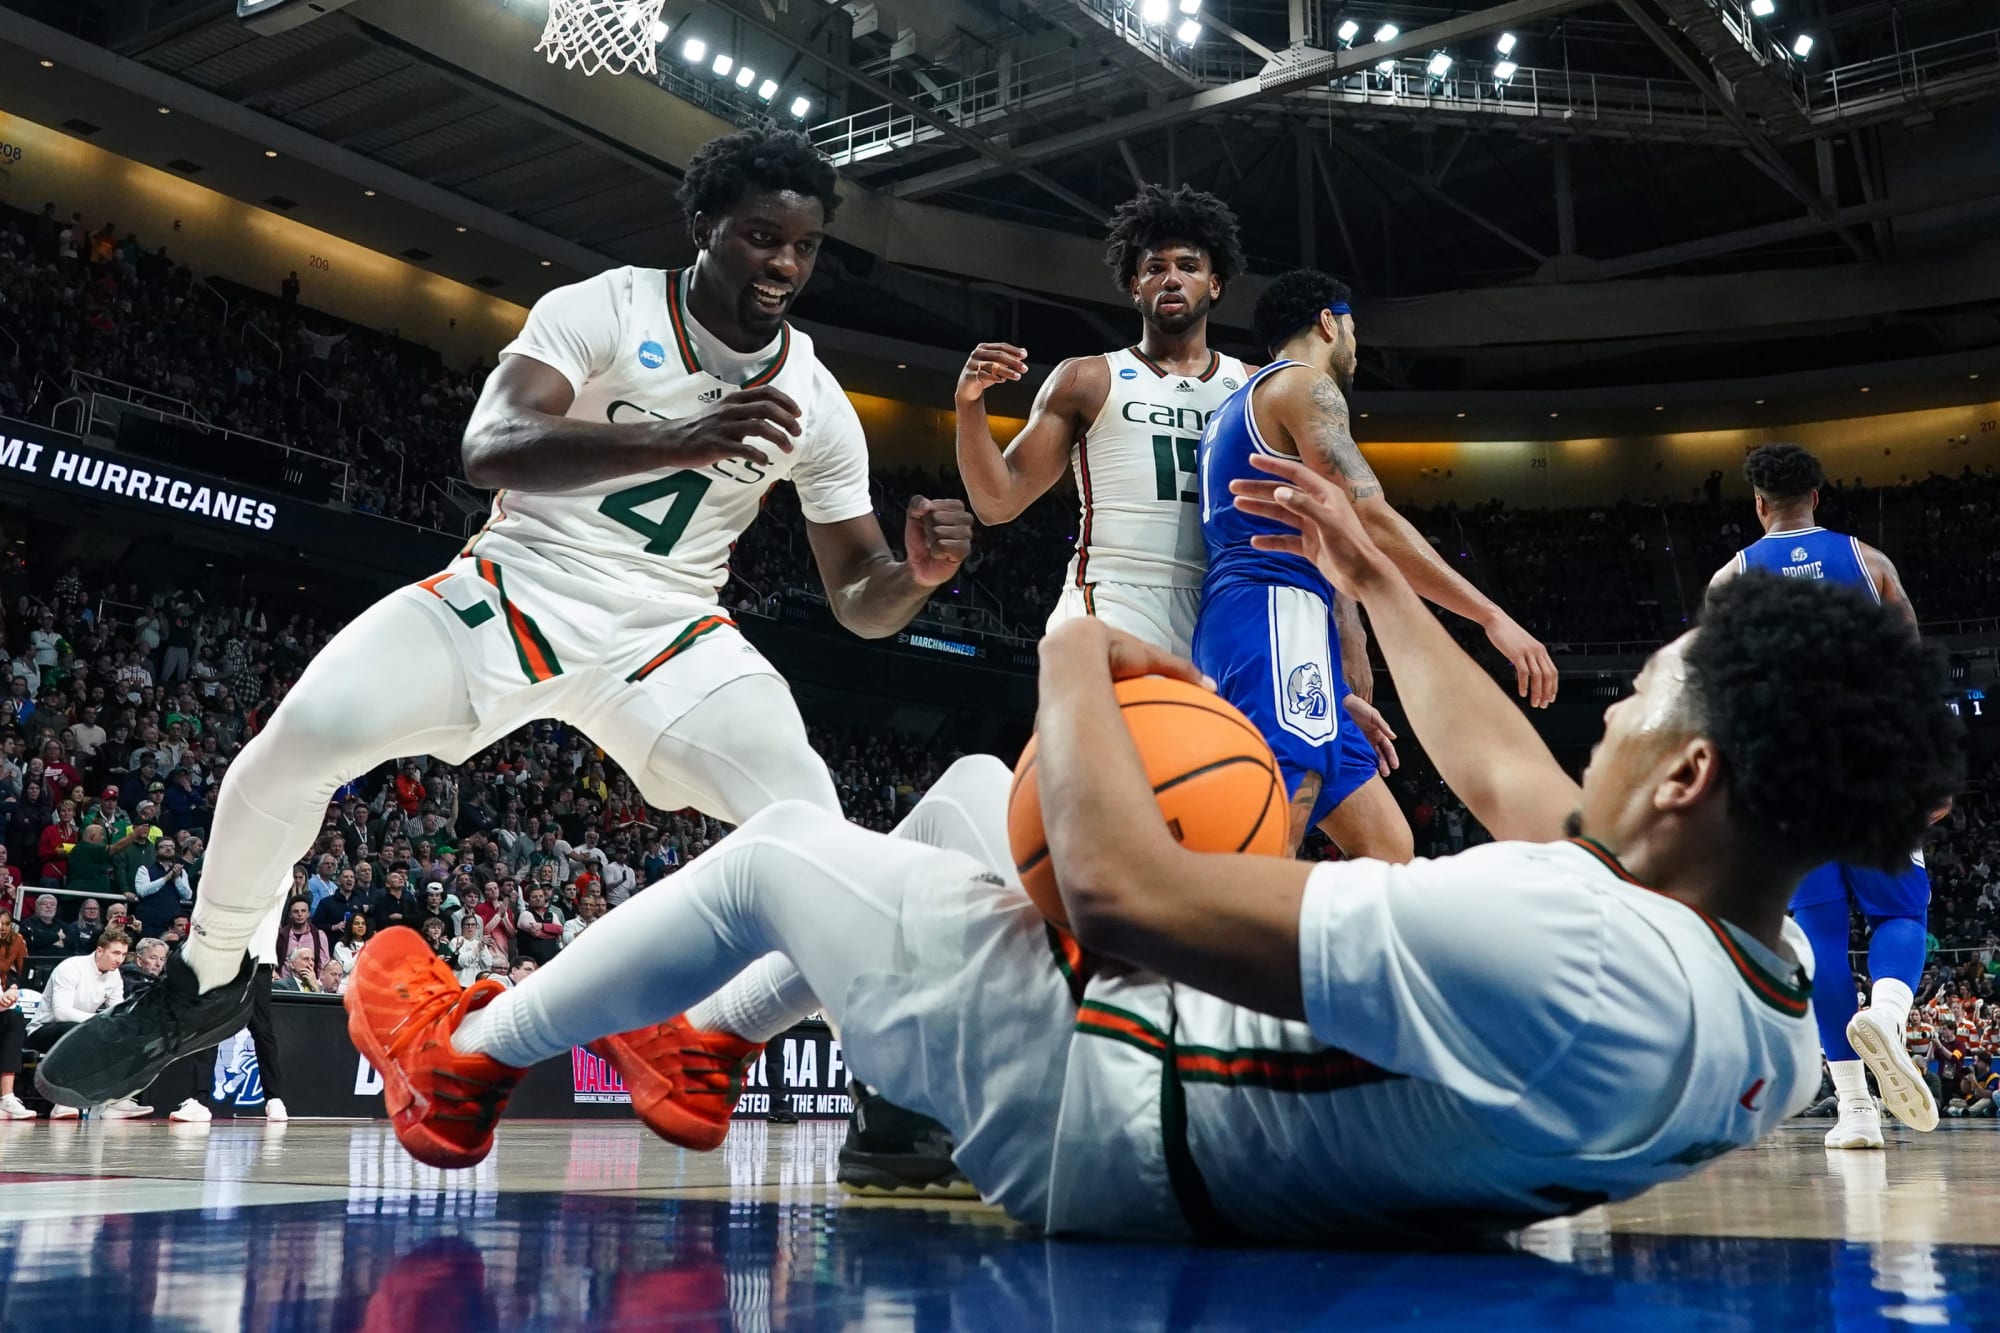 Miami basketball versus Indiana NCAA Tournament: Game info, odds, live stream, TV